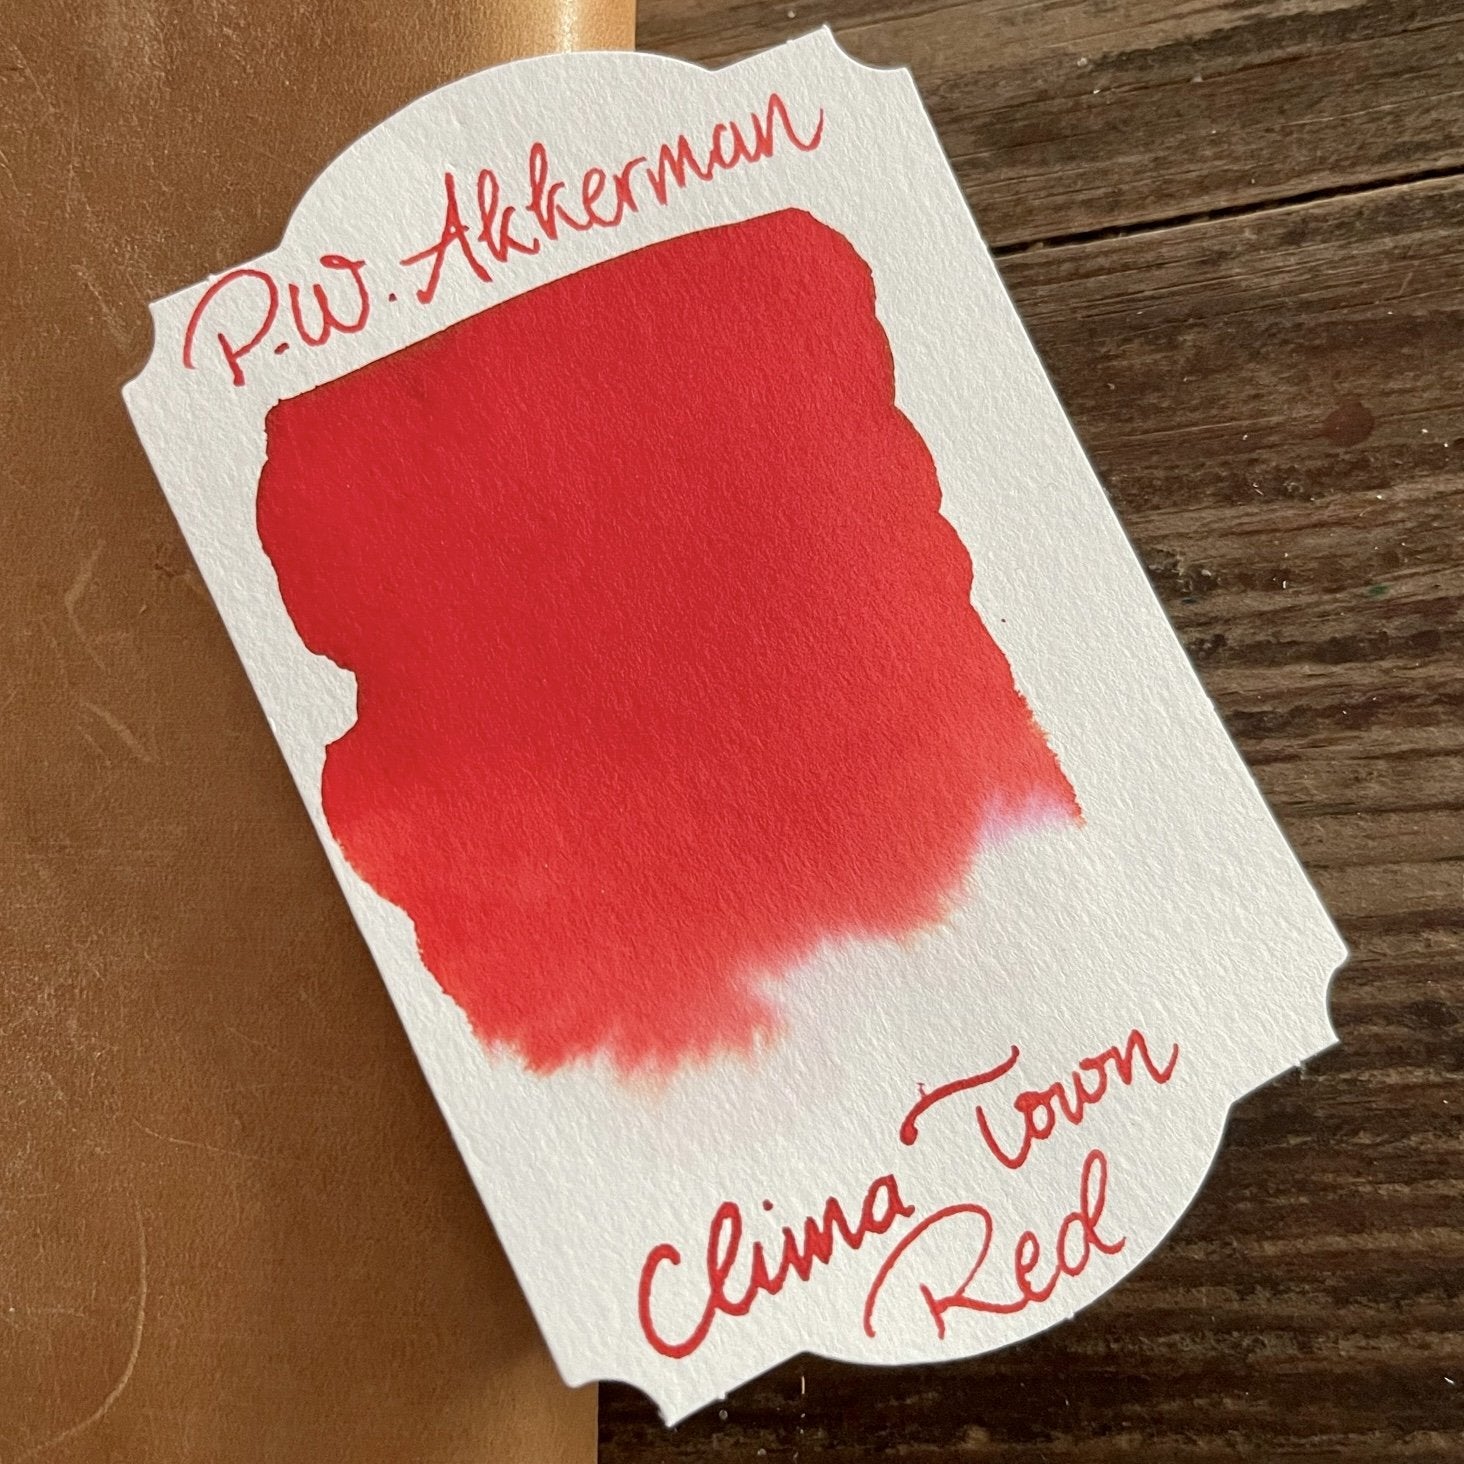 Akkerman ChinaTown Red Ink